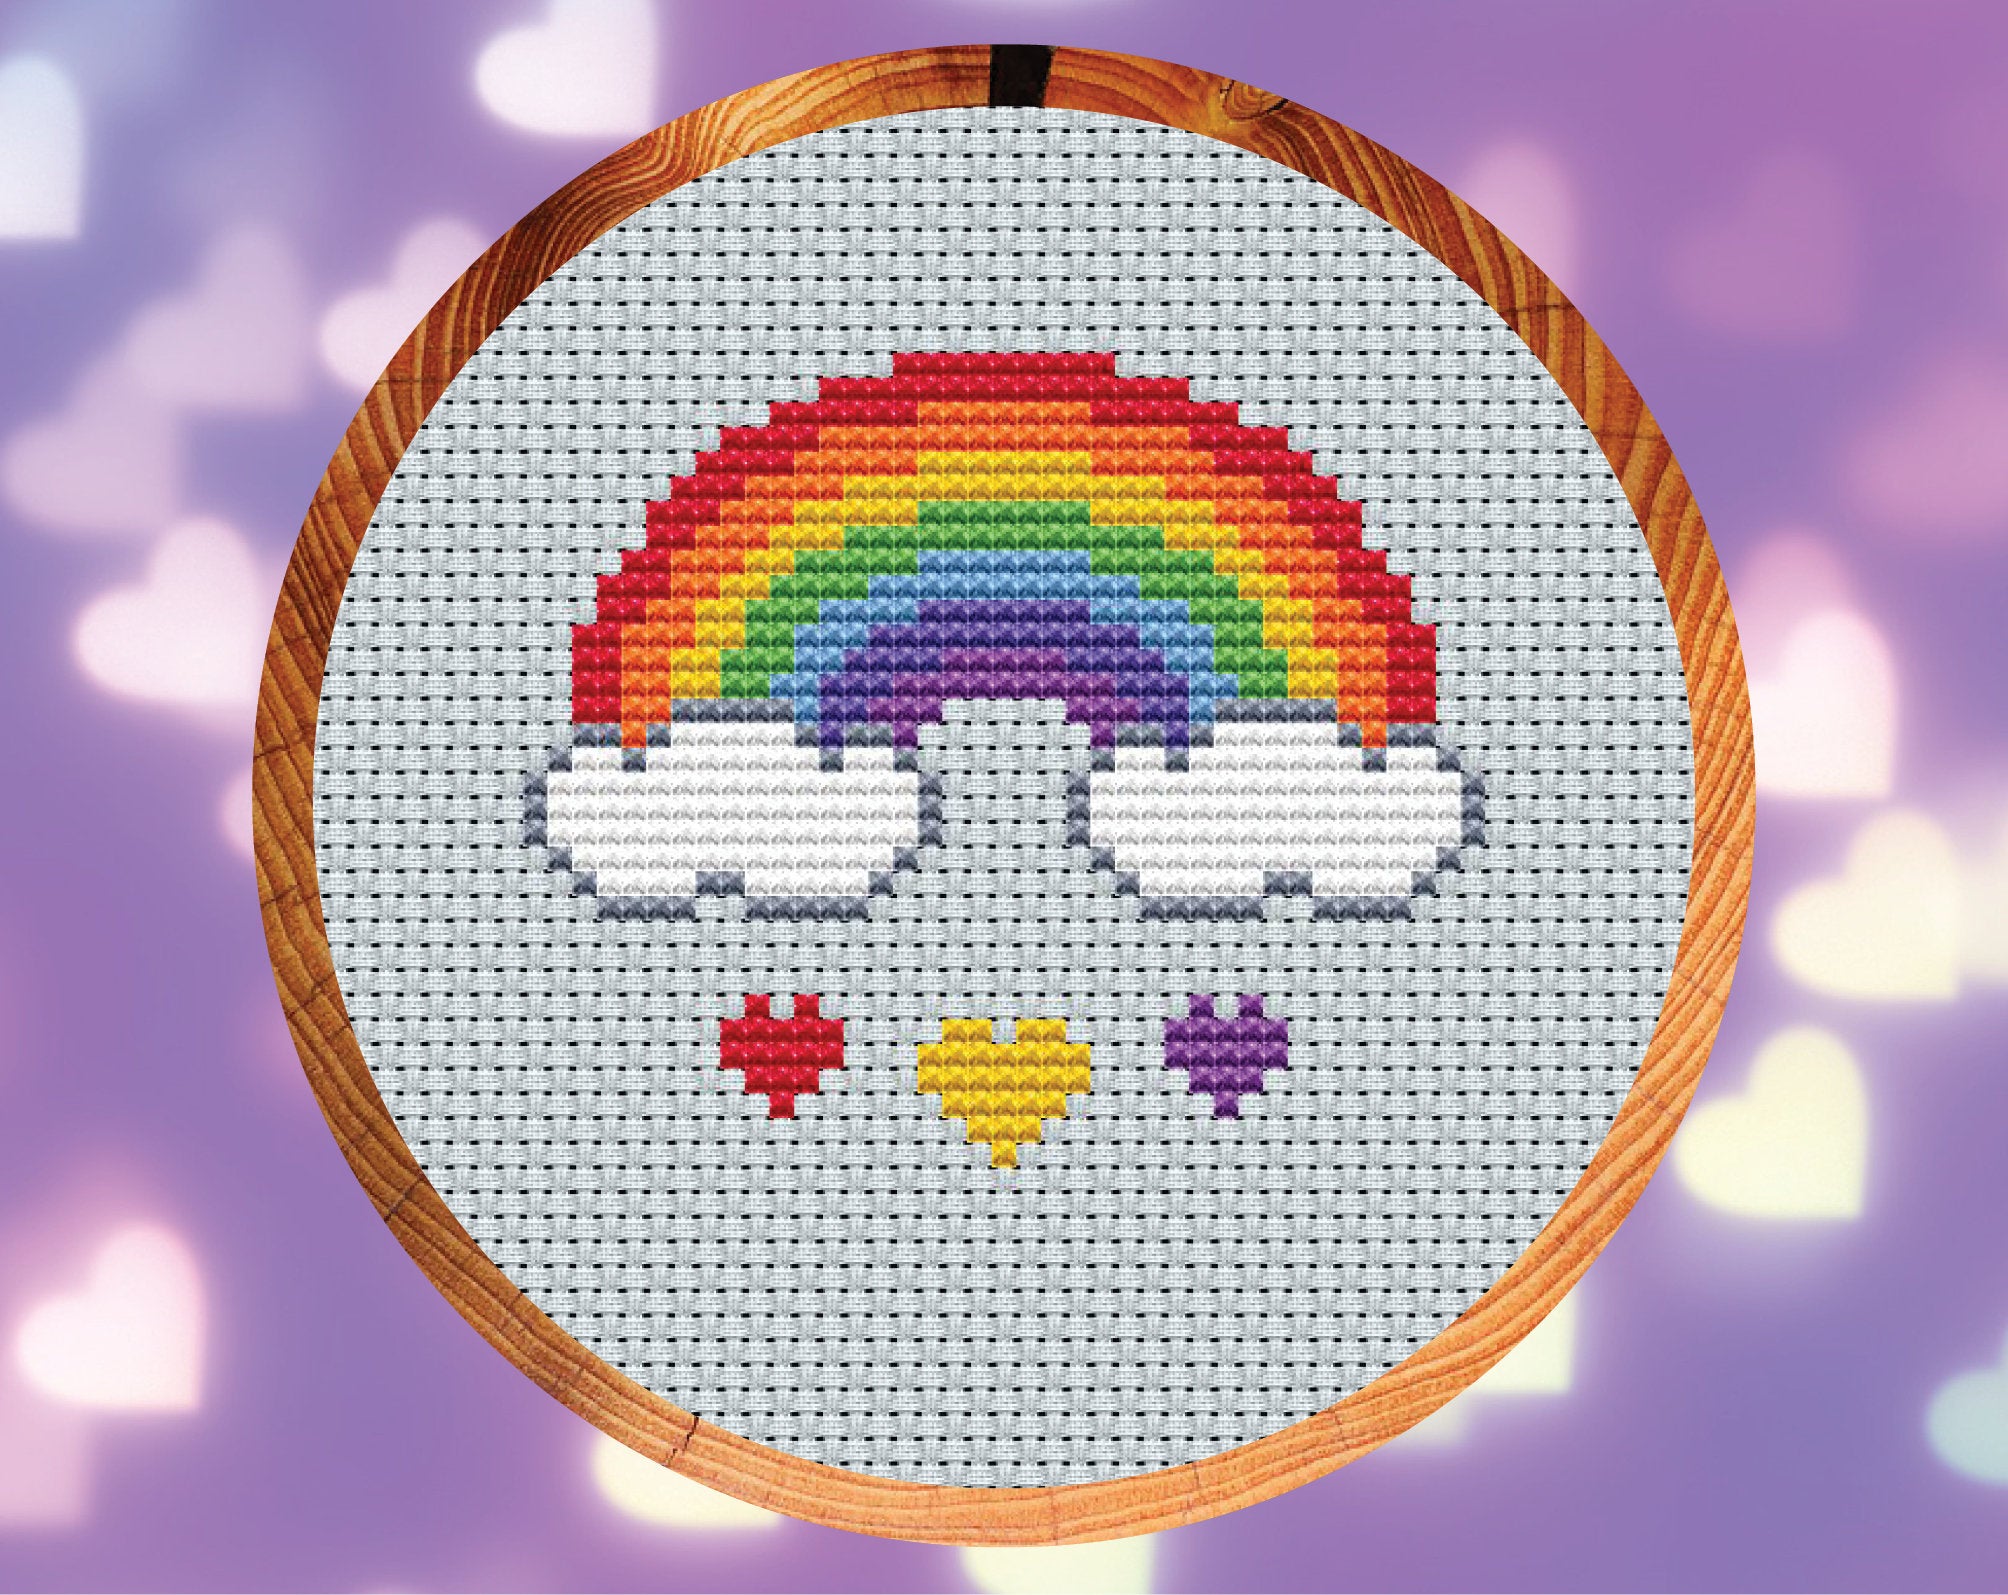 Mini Rainbow and Hearts cross stitch pattern